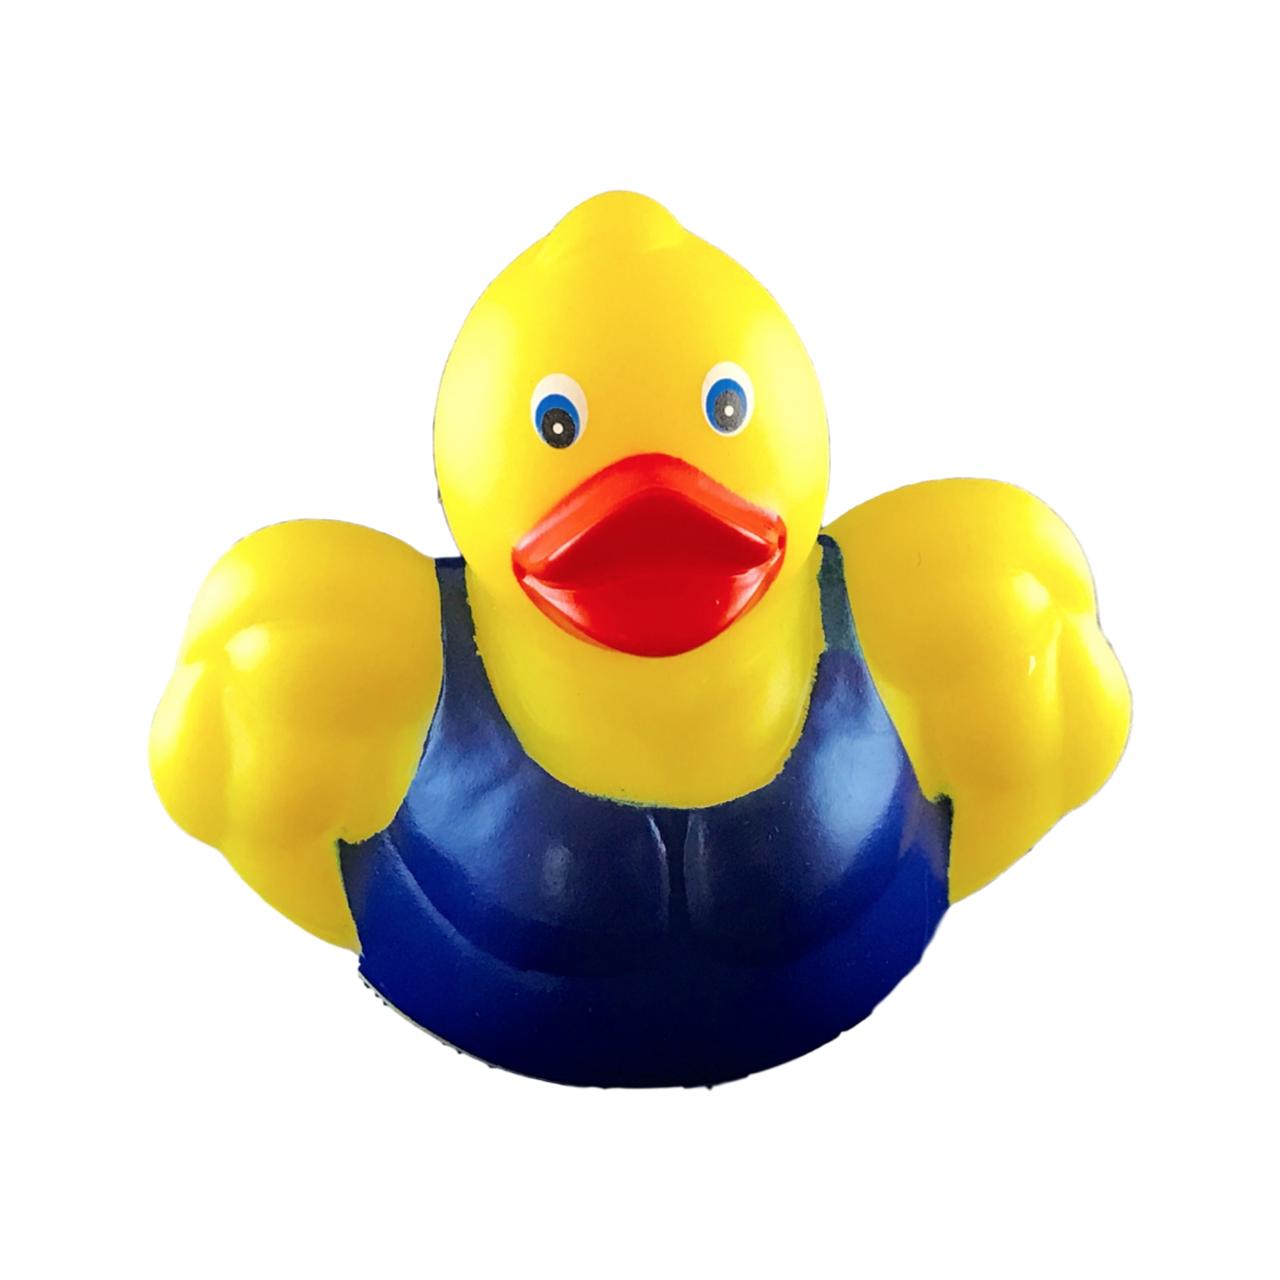 Body Builder Rubber Duck - Rubber Duck For Sale in Bulk for $4.50